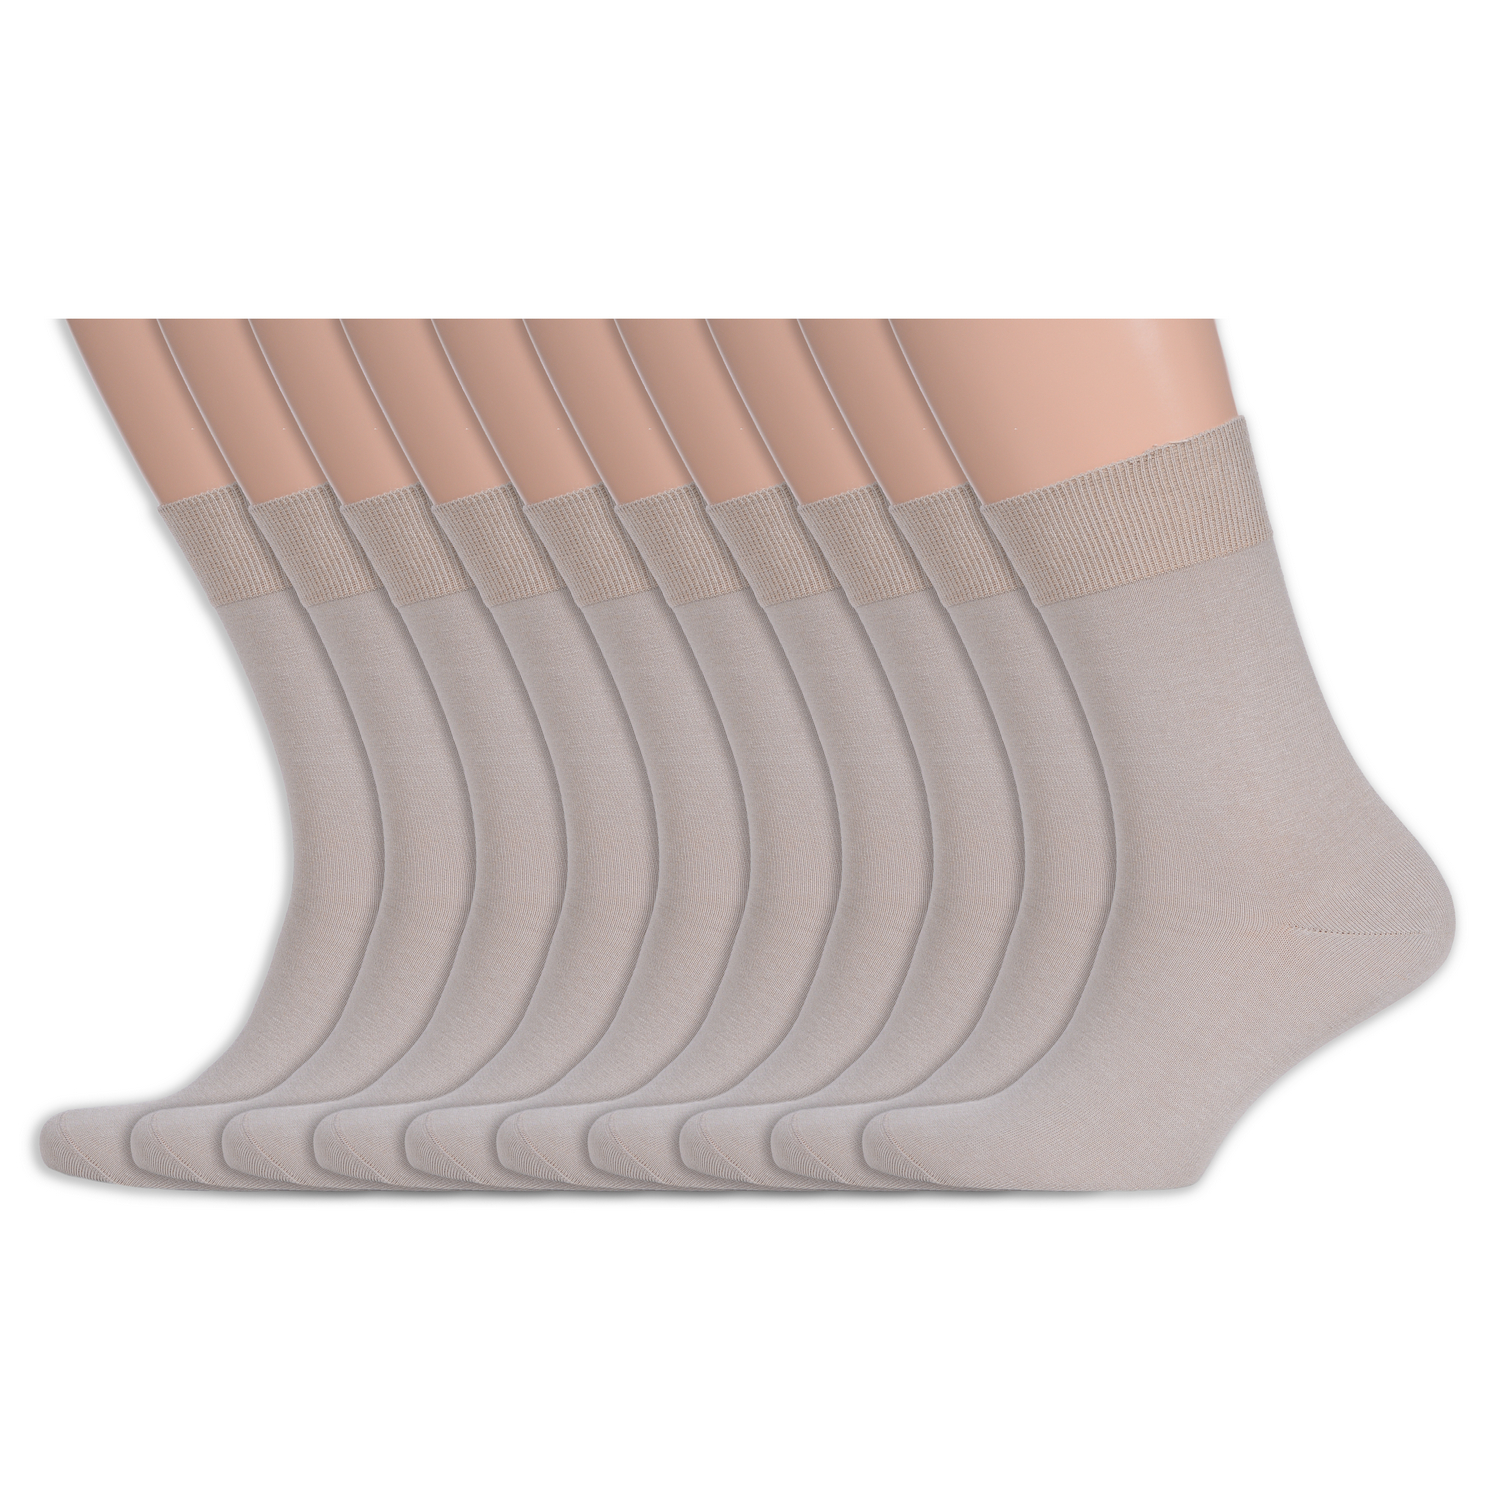 Комплект из 10 пар мужских носков ТМ CAVALLIERE (RuSocks)